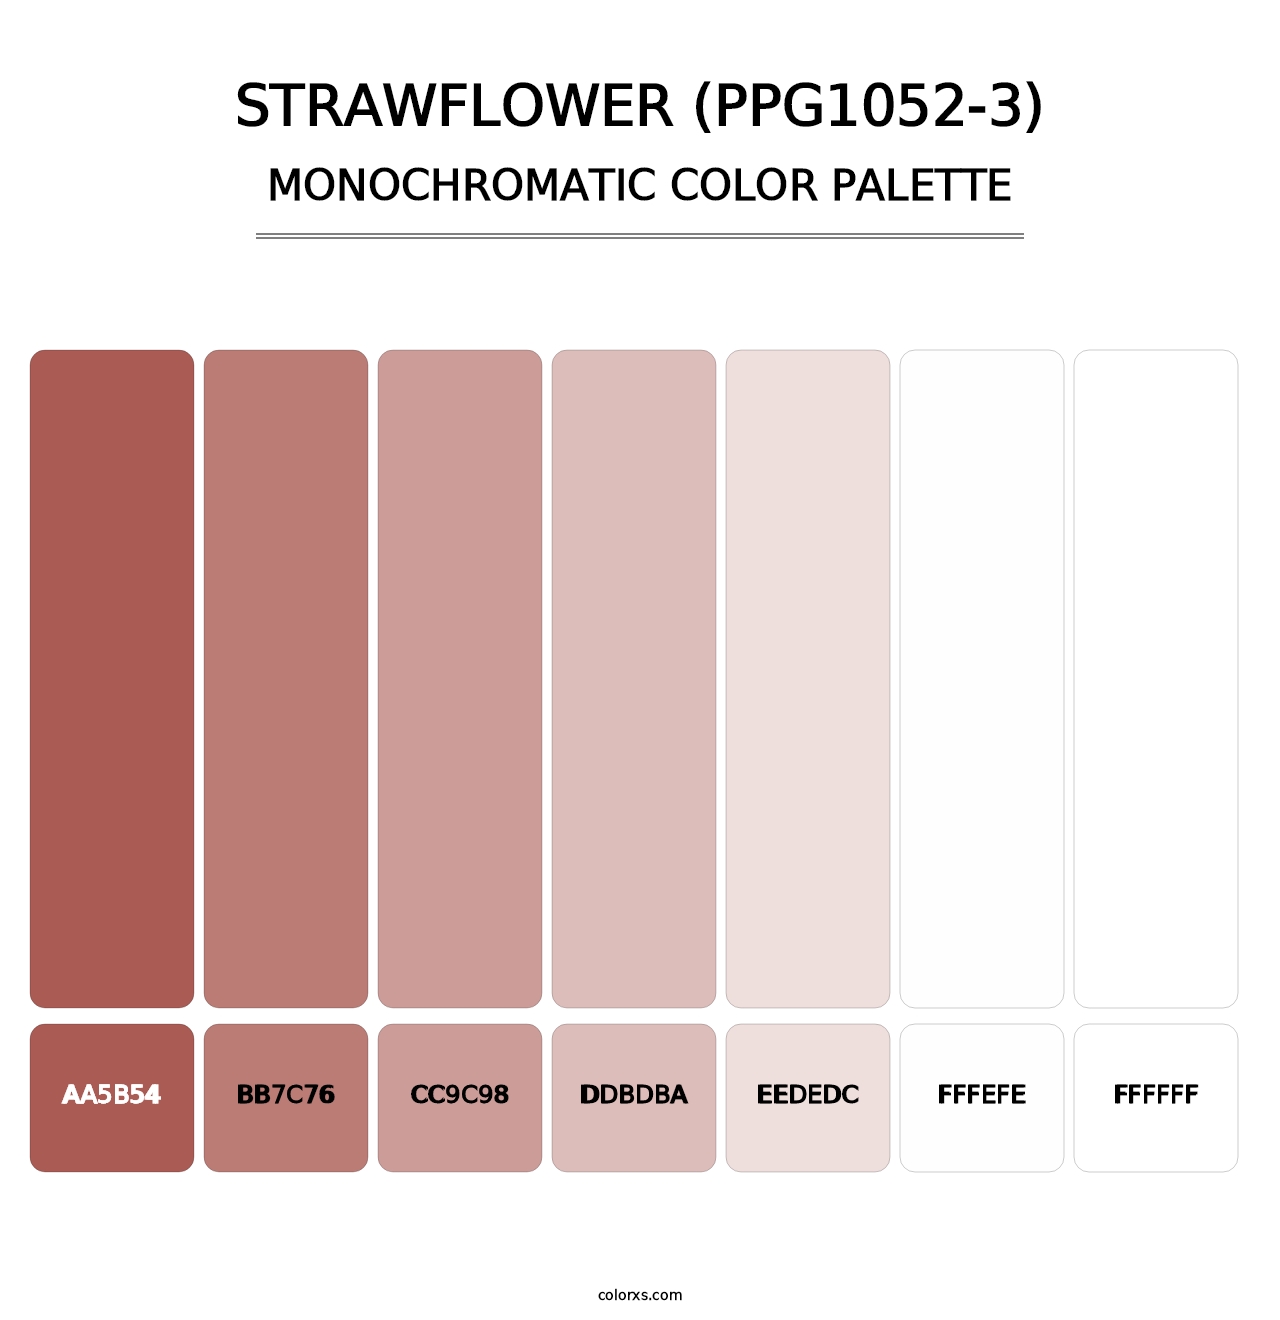 Strawflower (PPG1052-3) - Monochromatic Color Palette